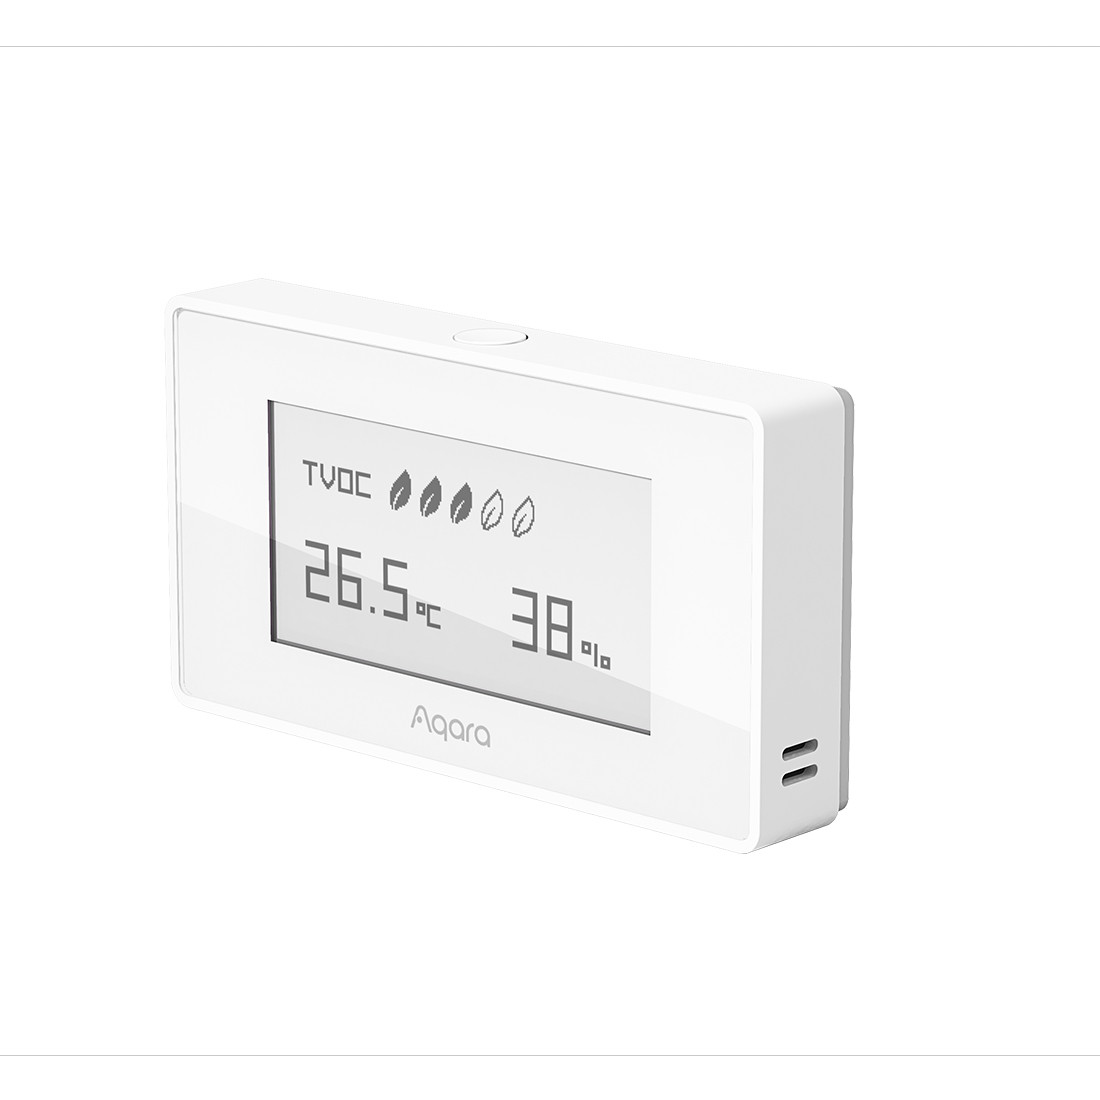 Монитор качества воздуха  Aqara  TVOC  AAQS-S01/AS029GLW02  Zigbee Белый